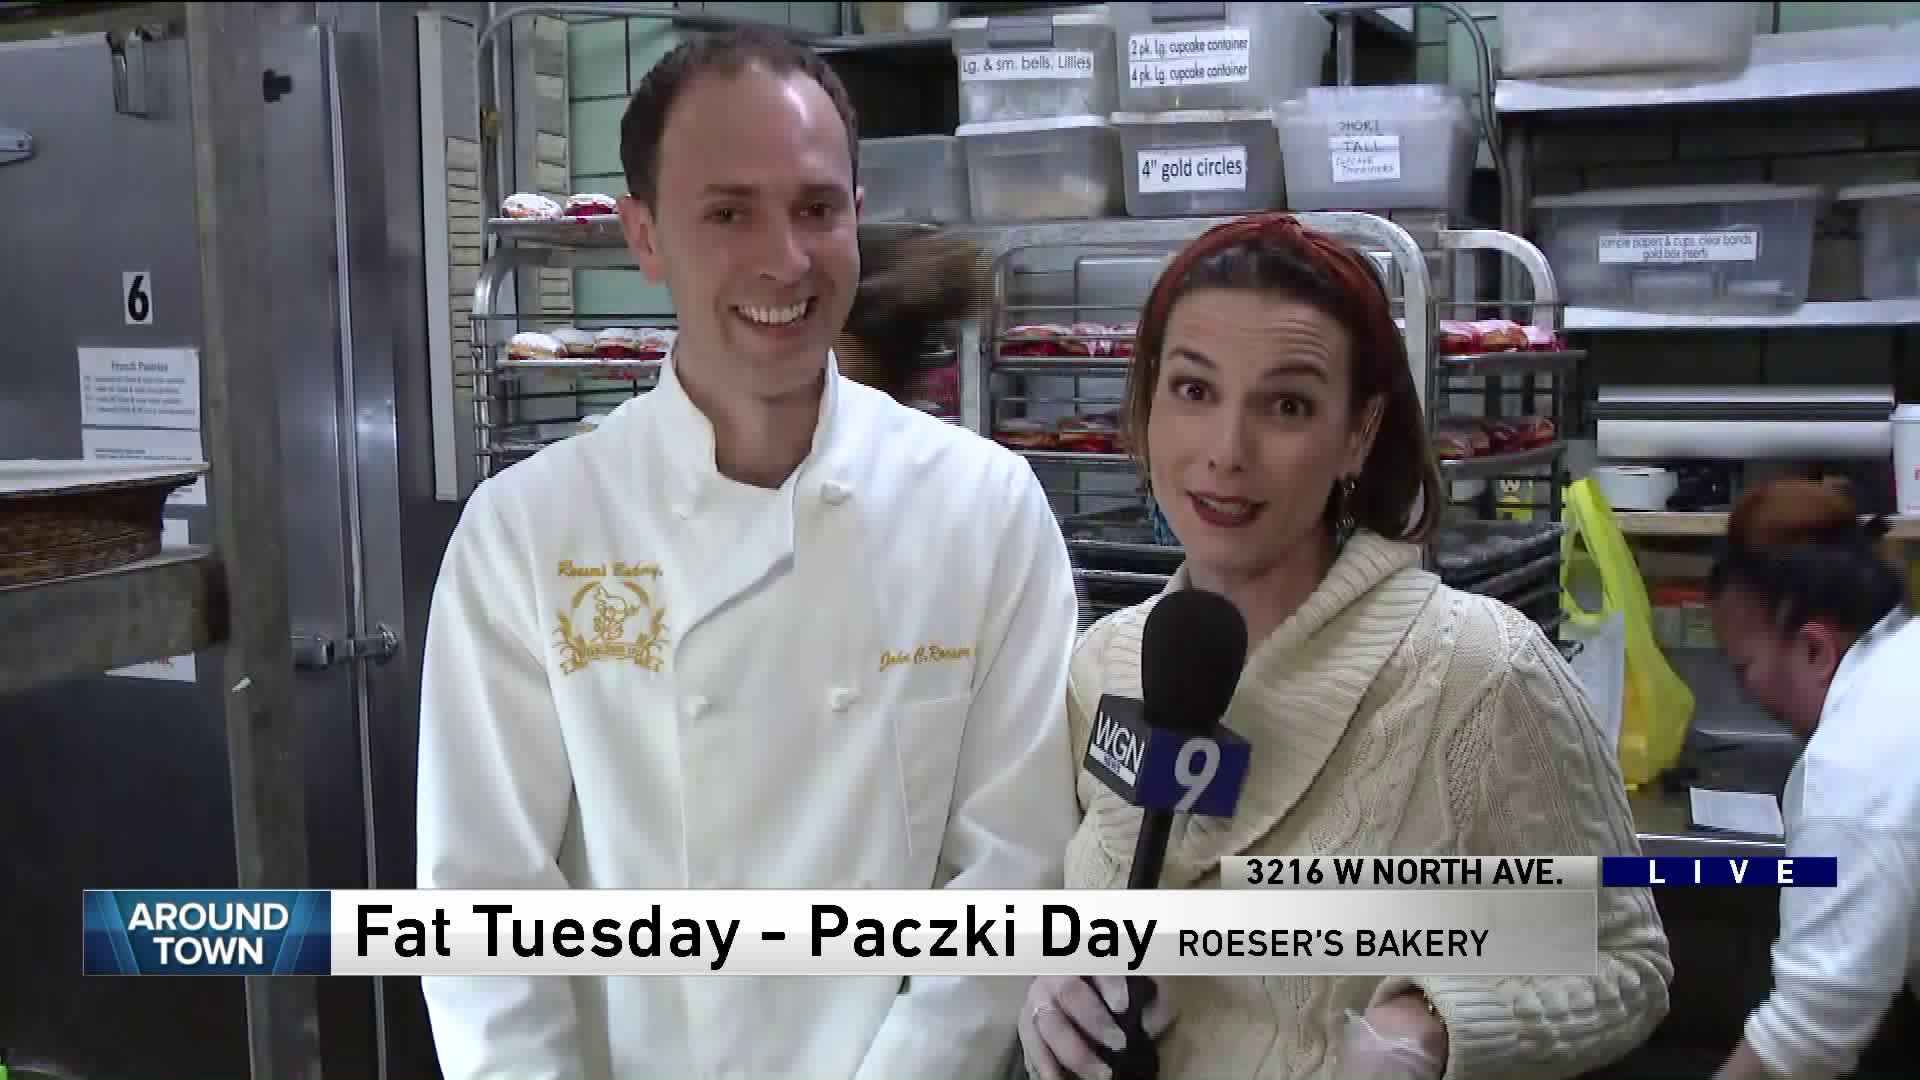 Around Town celebrates Paczki Day at Roeser’s Bakery